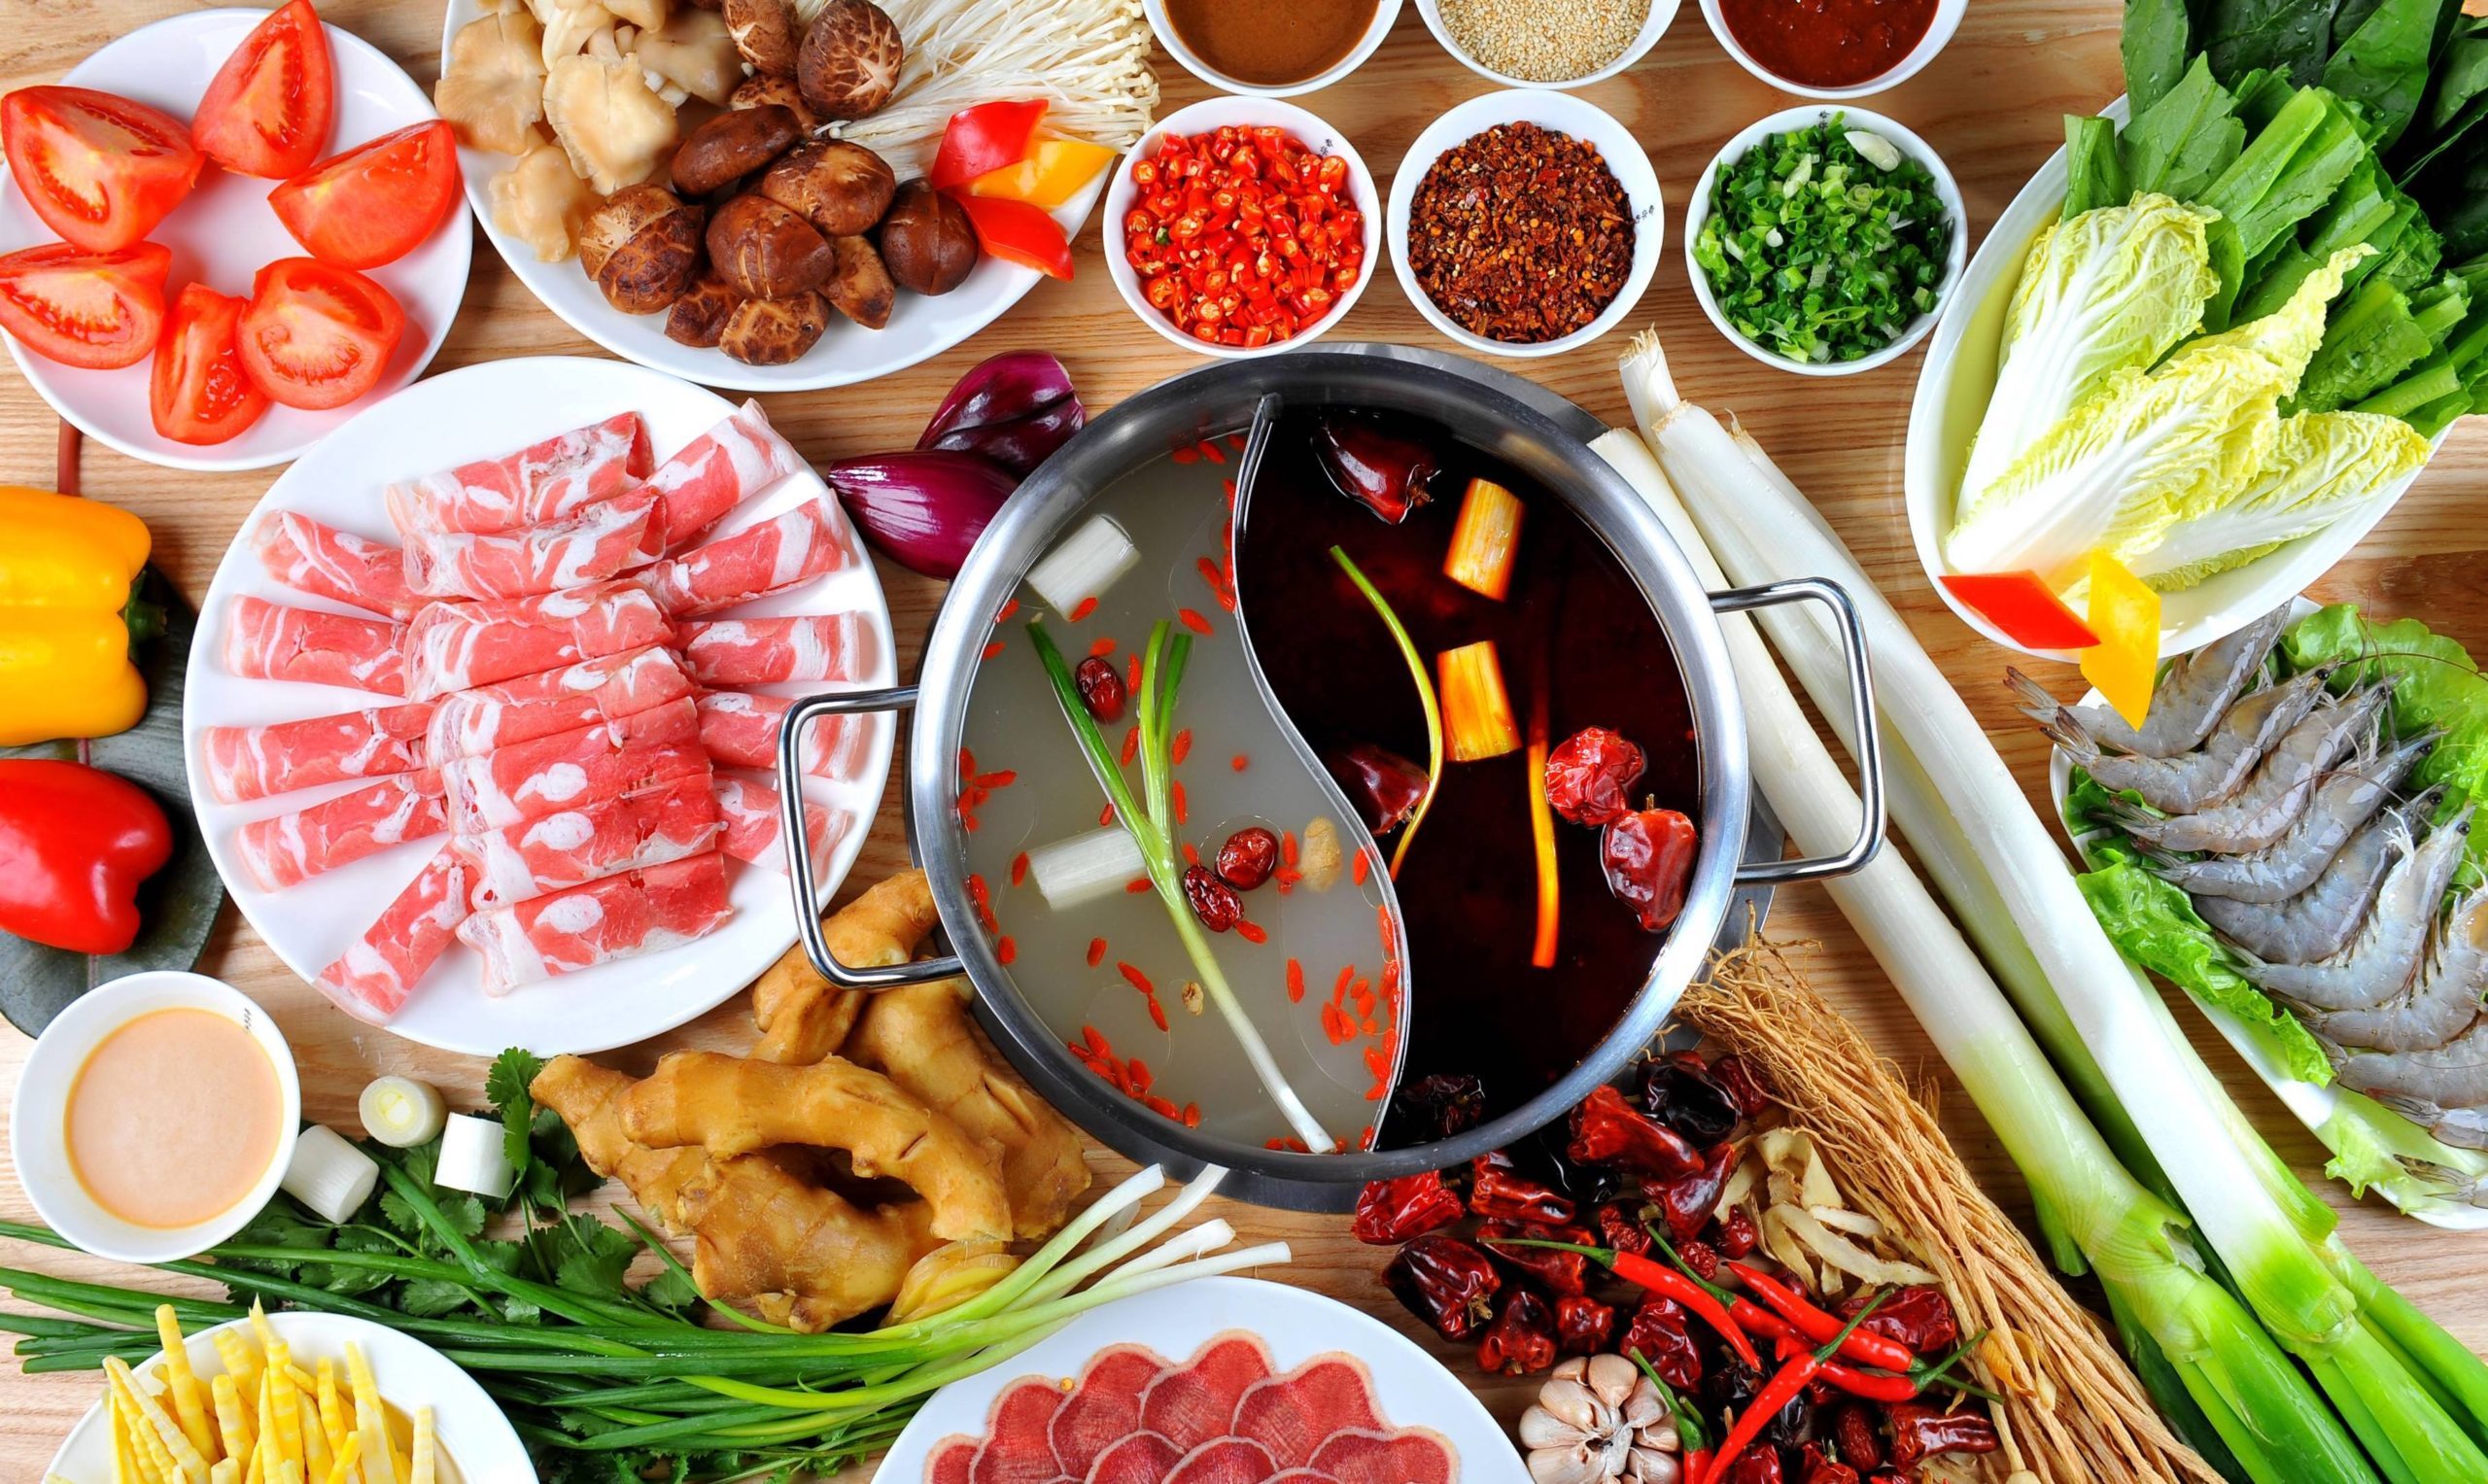 Hotpot ingredient supplier Guoquan Shihui pockets $60m Series C funding